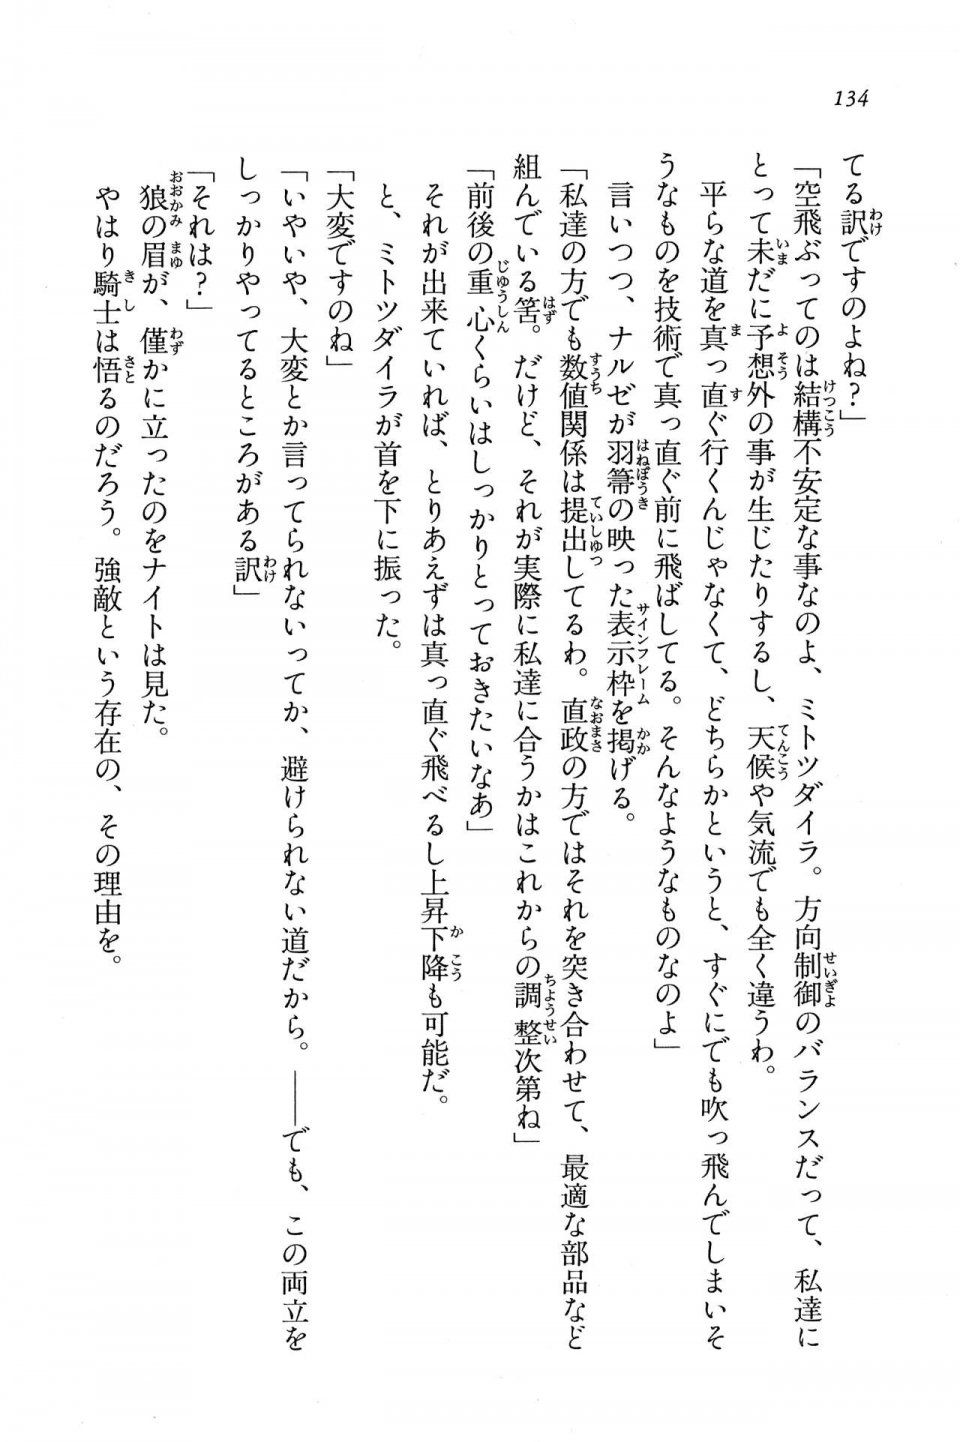 Kyoukai Senjou no Horizon BD Special Mininovel Vol 7(4A) - Photo #138